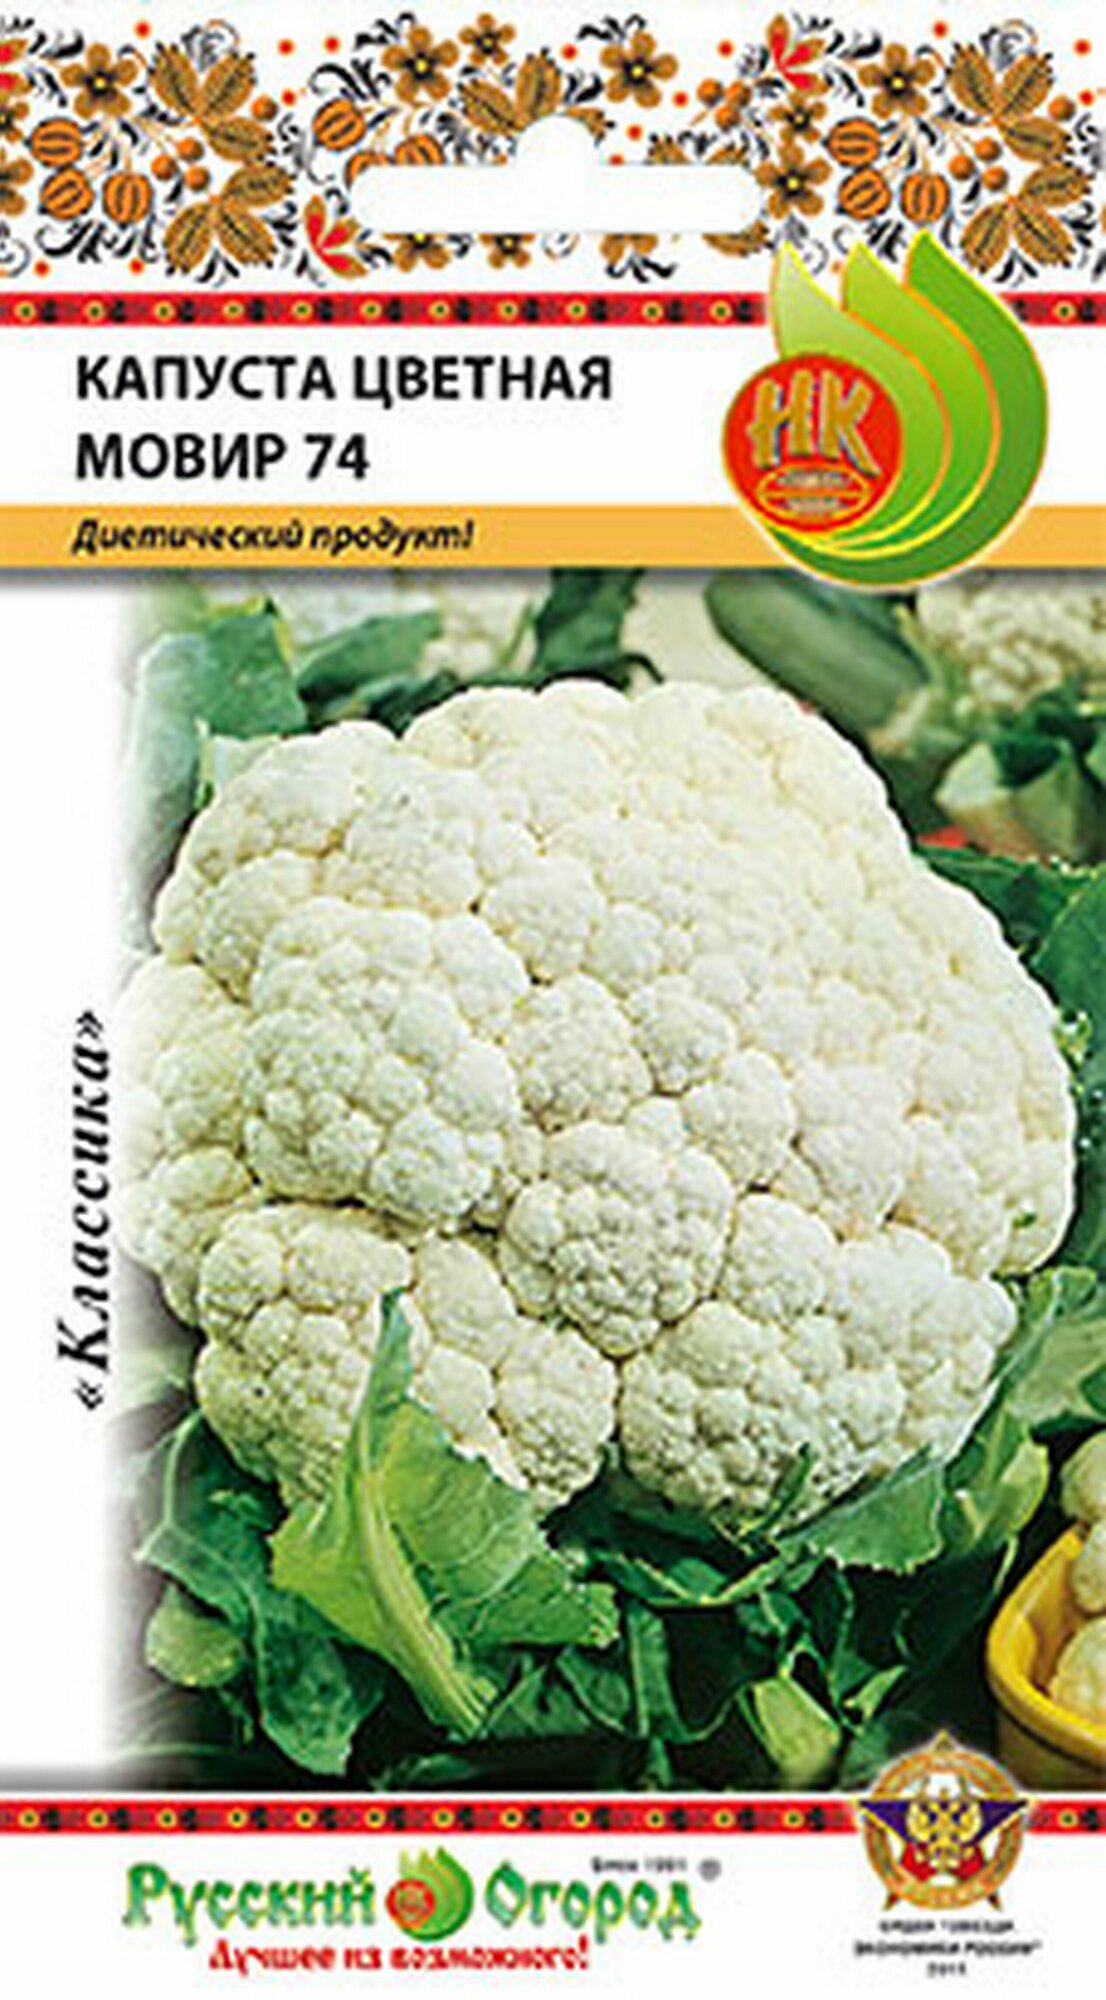 Семена Капуста цветная Мовир 74 0.5 грамма семян Русский Огород